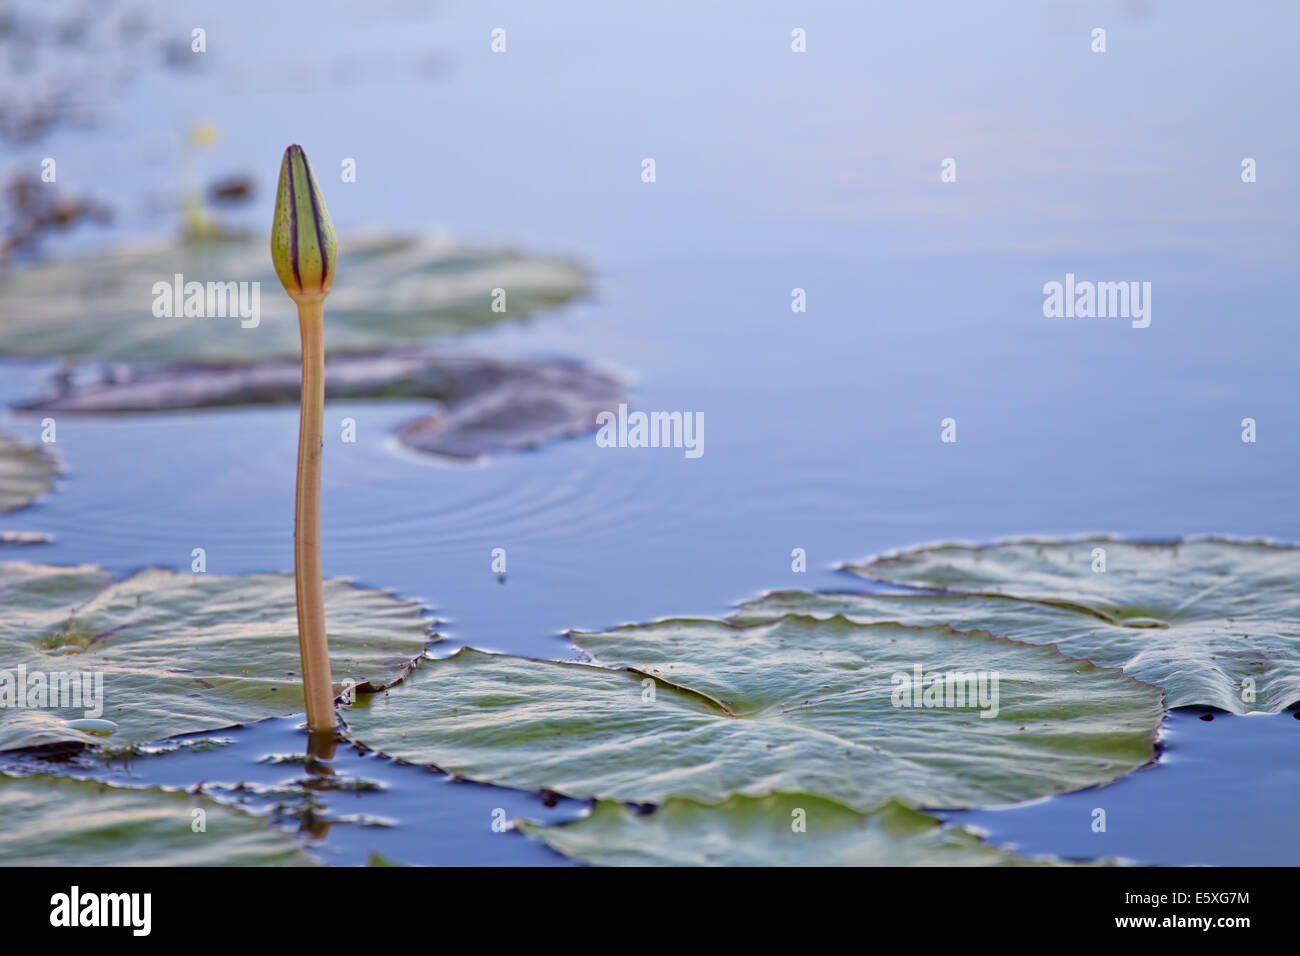 Water lilies cover the water in Bangweulu Wetlands, Zambia. Stock Photo